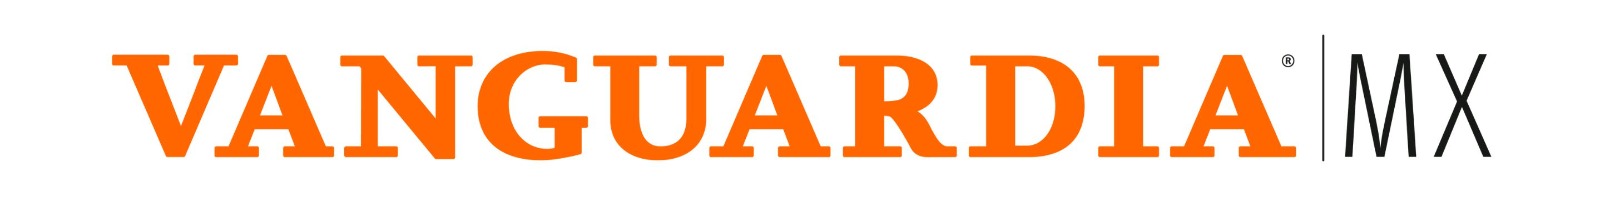 logo: Vanguardia